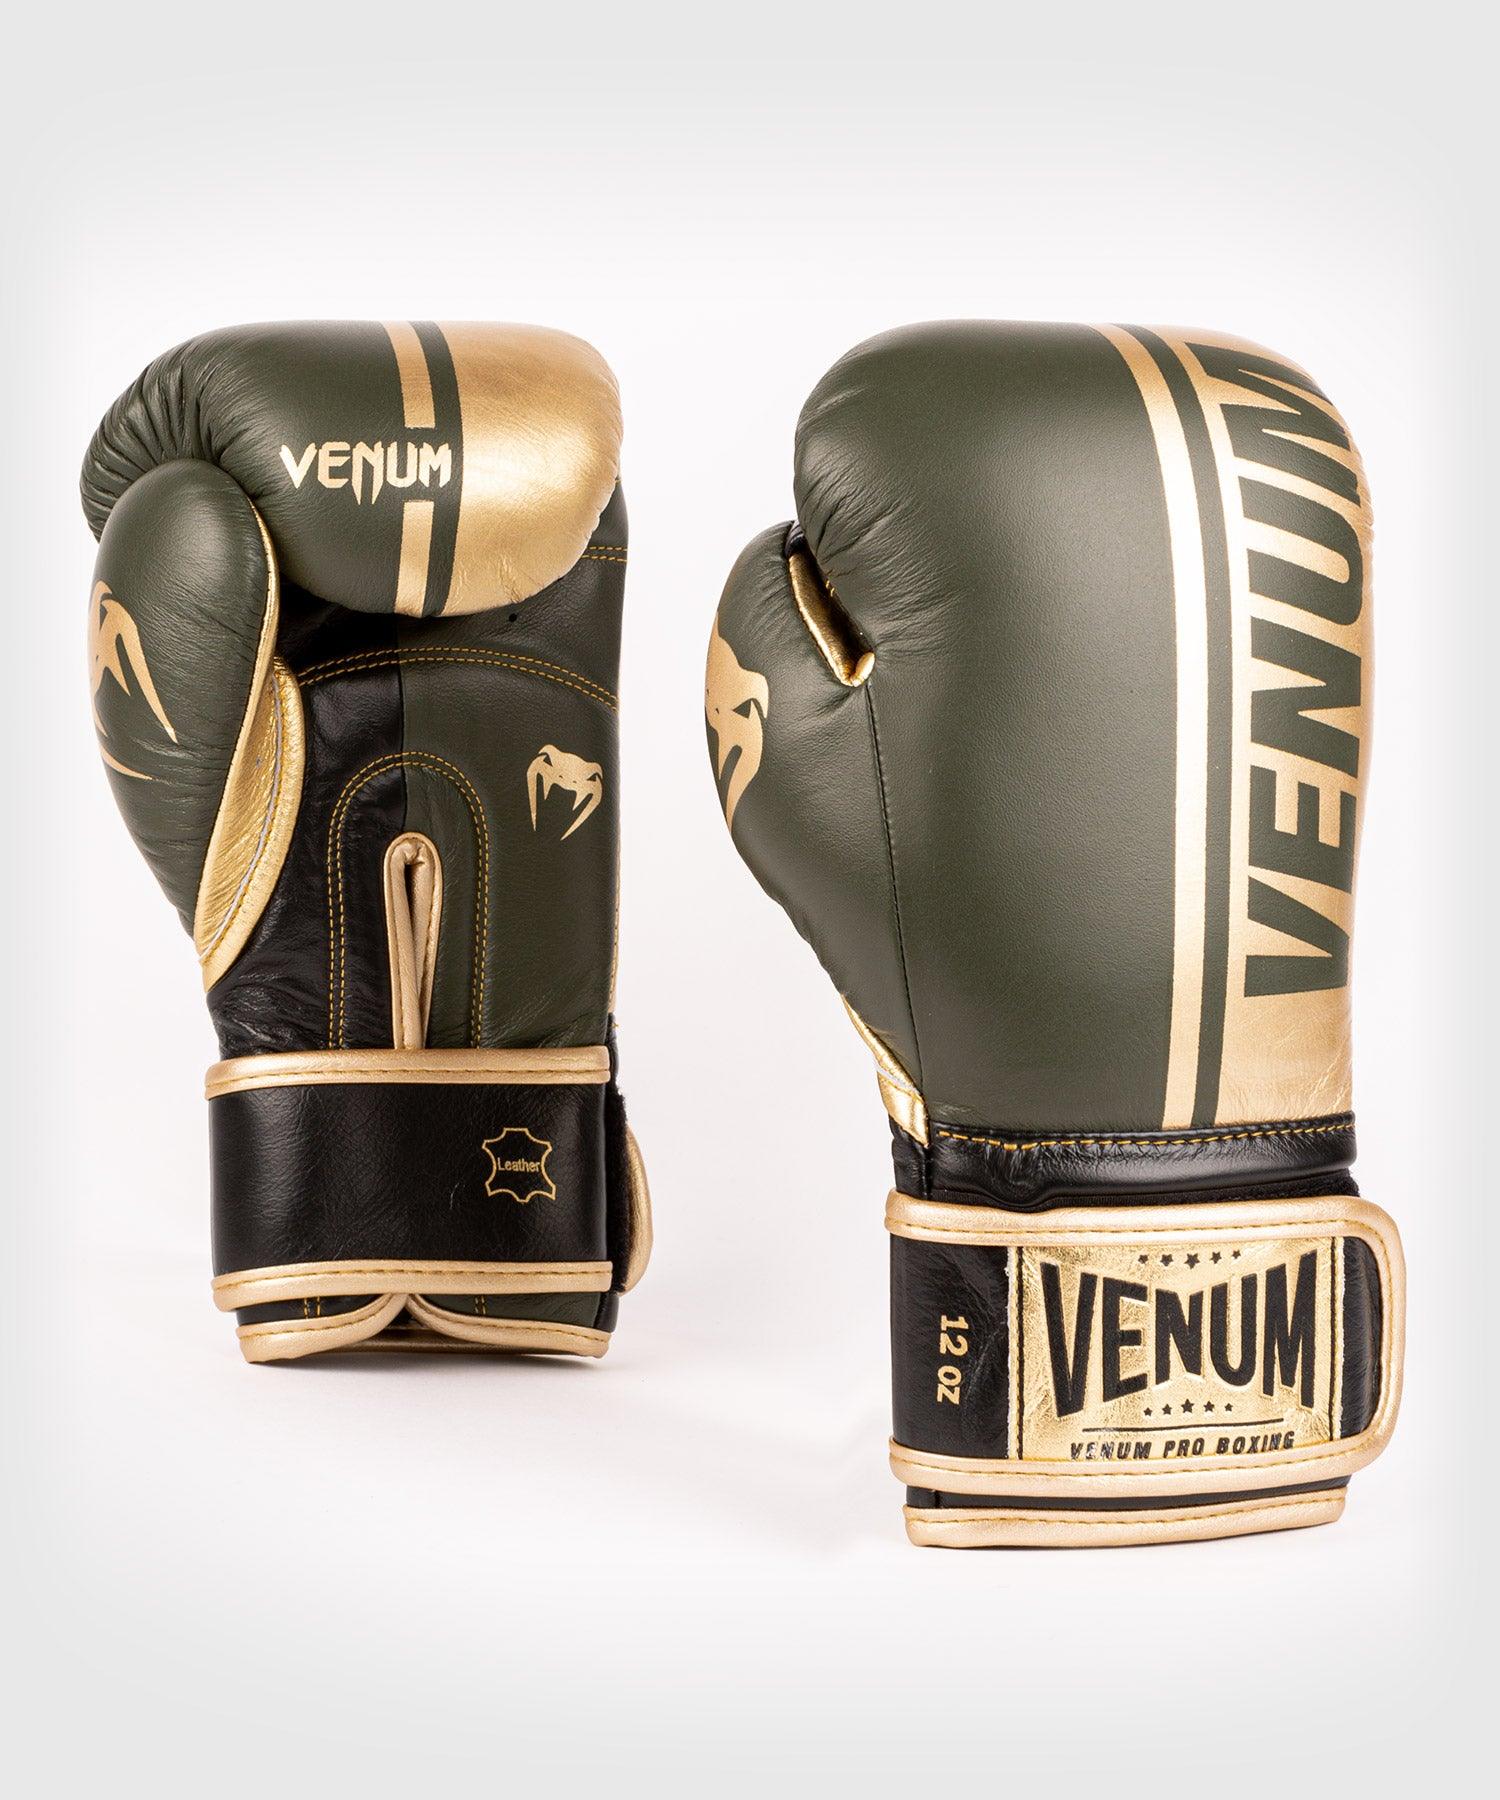 Venum Shield Pro Boxing Gloves Velcro - Khaki/Gold Picture 2